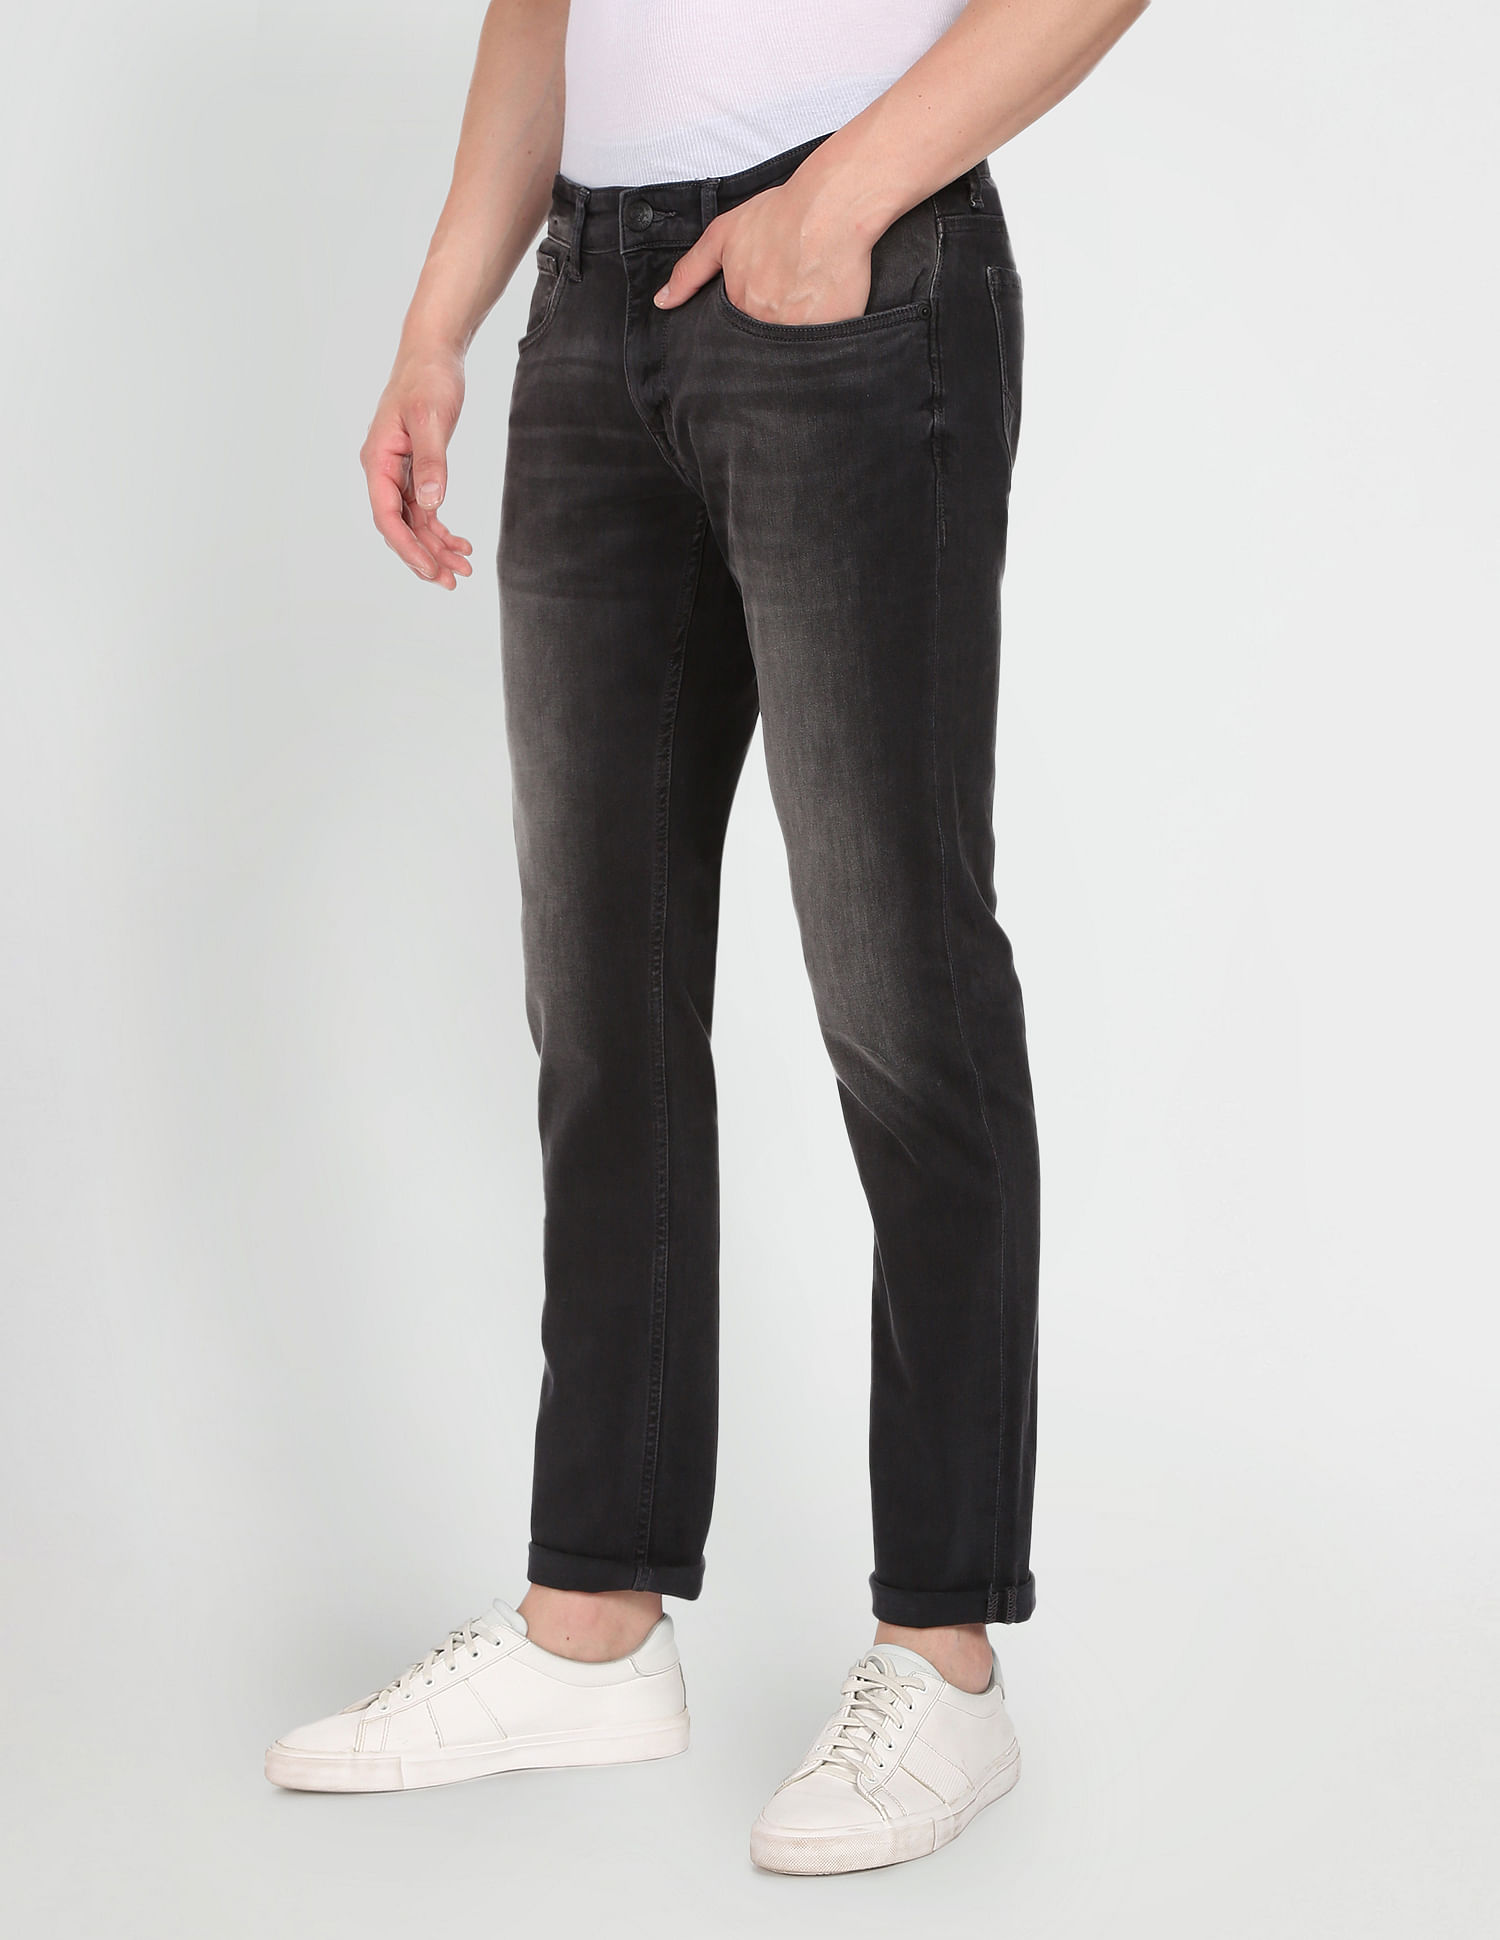 Levi's® Jeans, Denim Jackets & Clothing